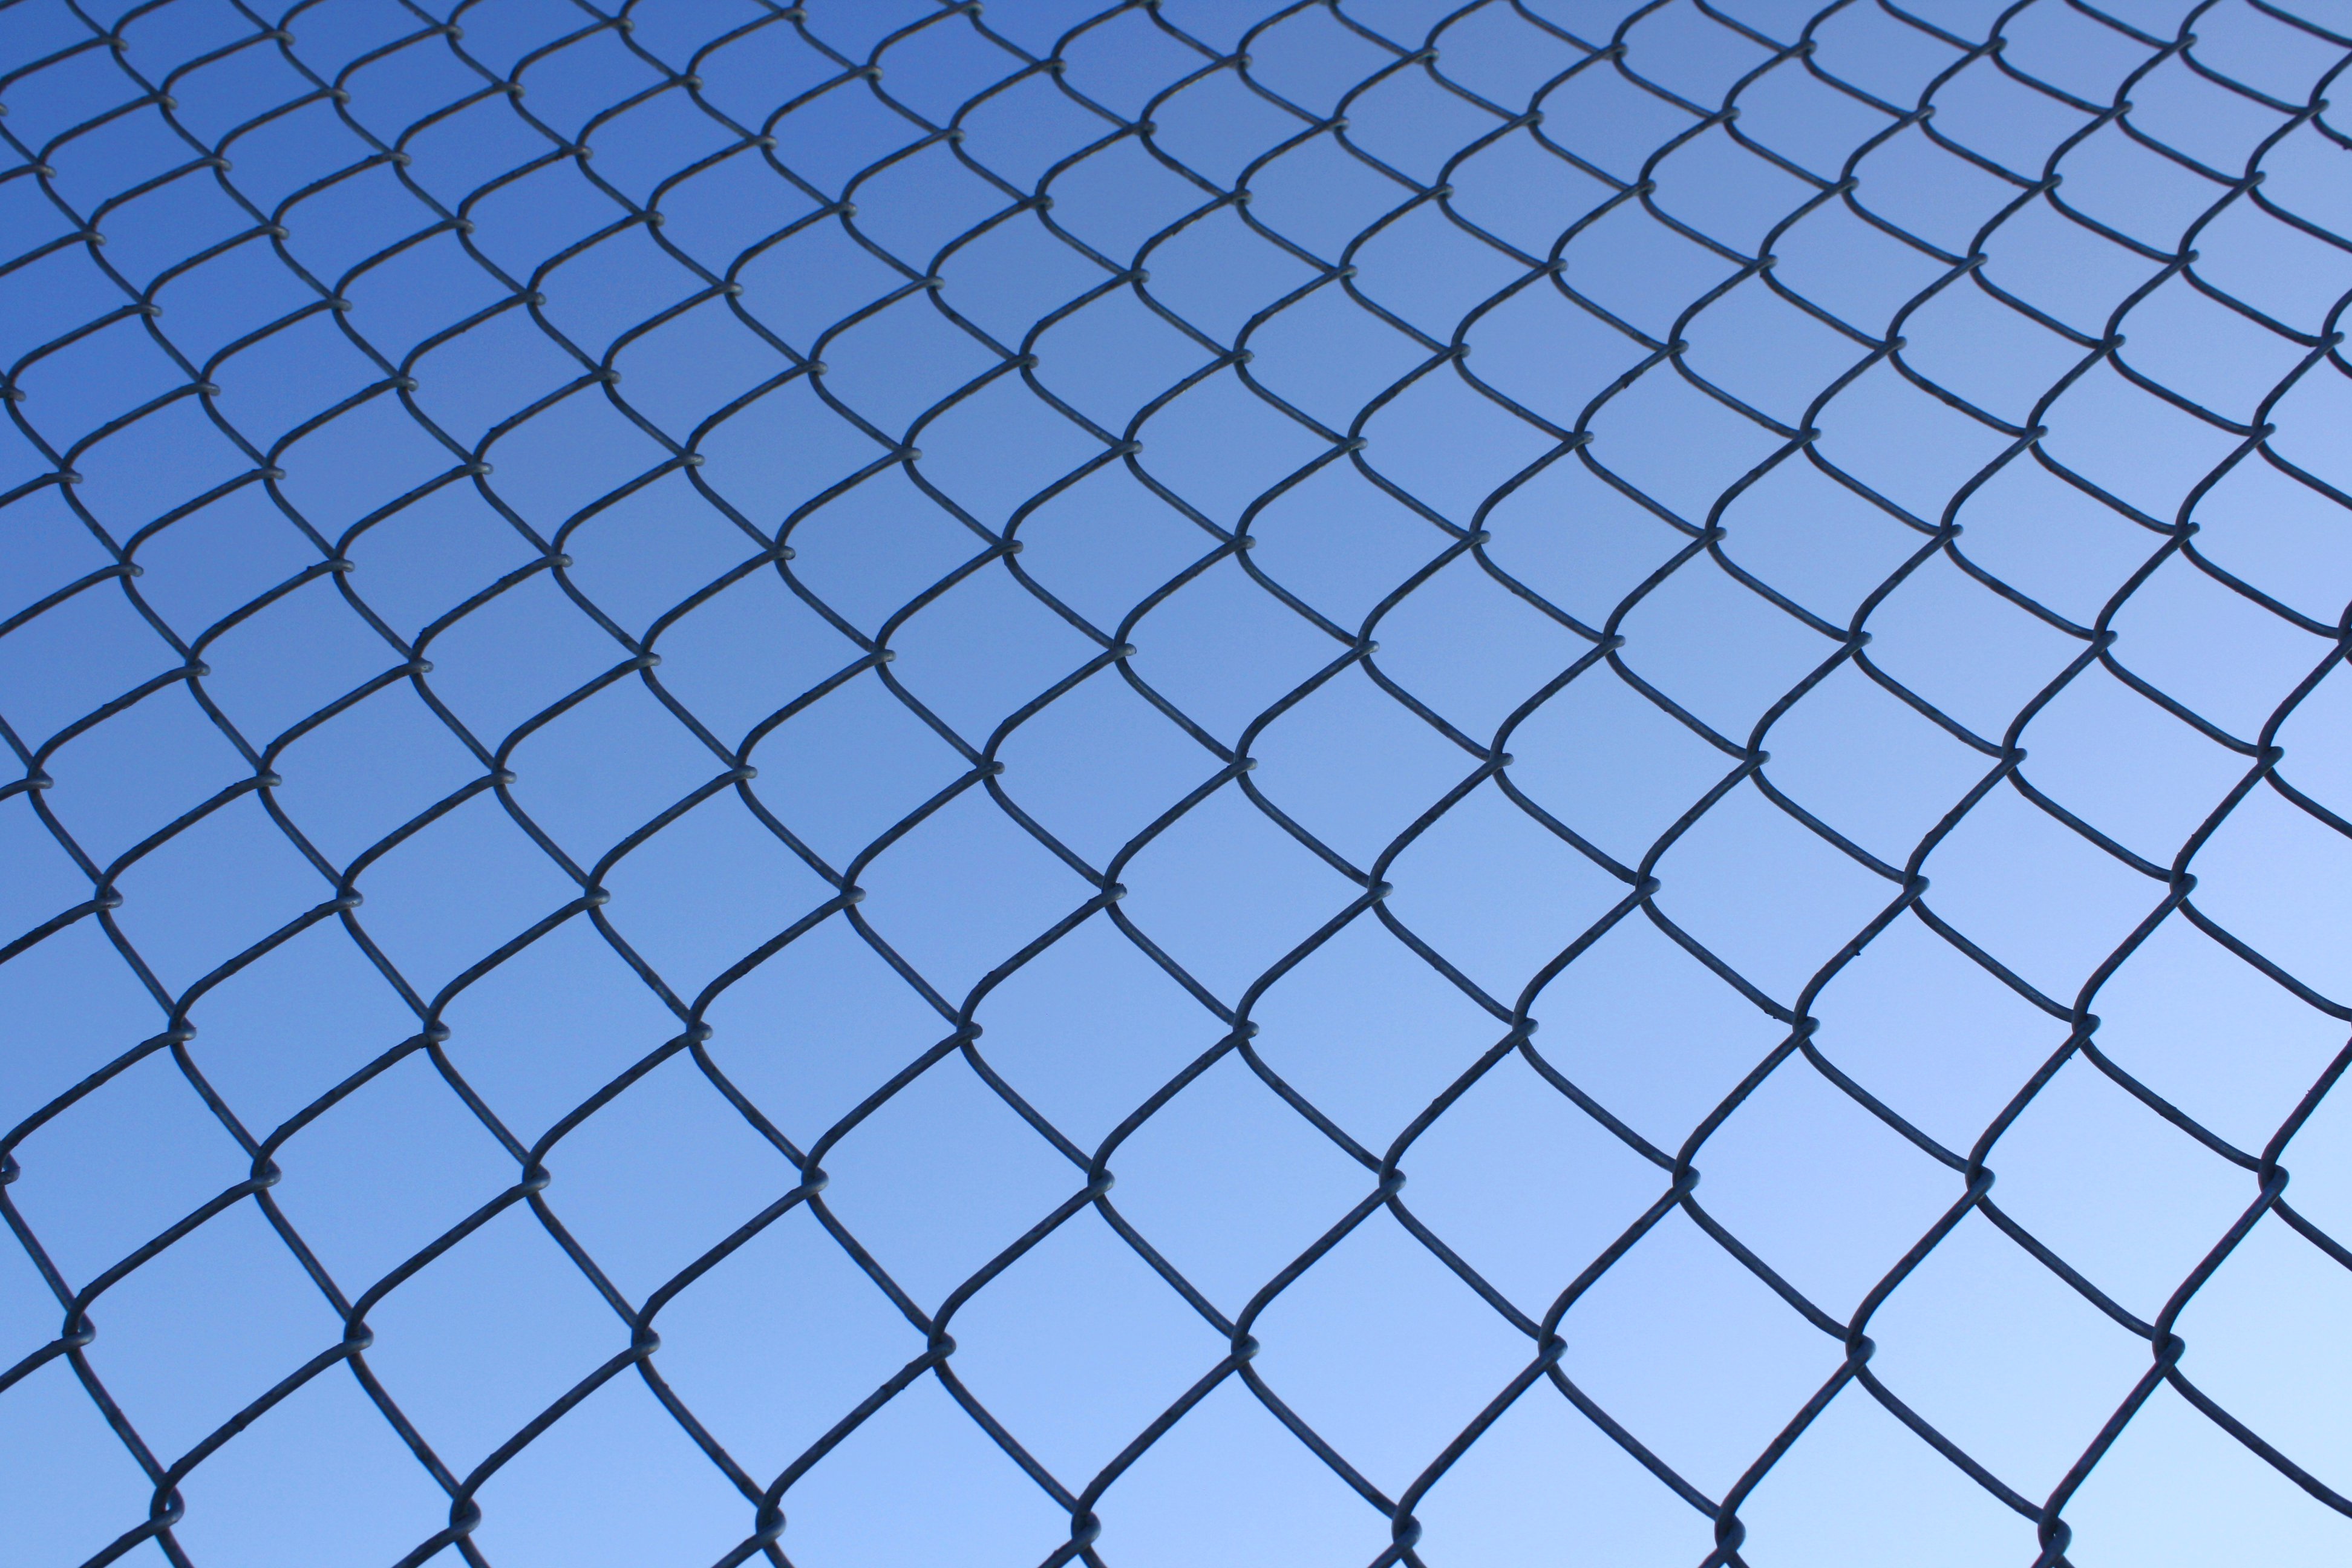 Chain Link Fence Texture Picture | Free Photograph | Photos Public ...